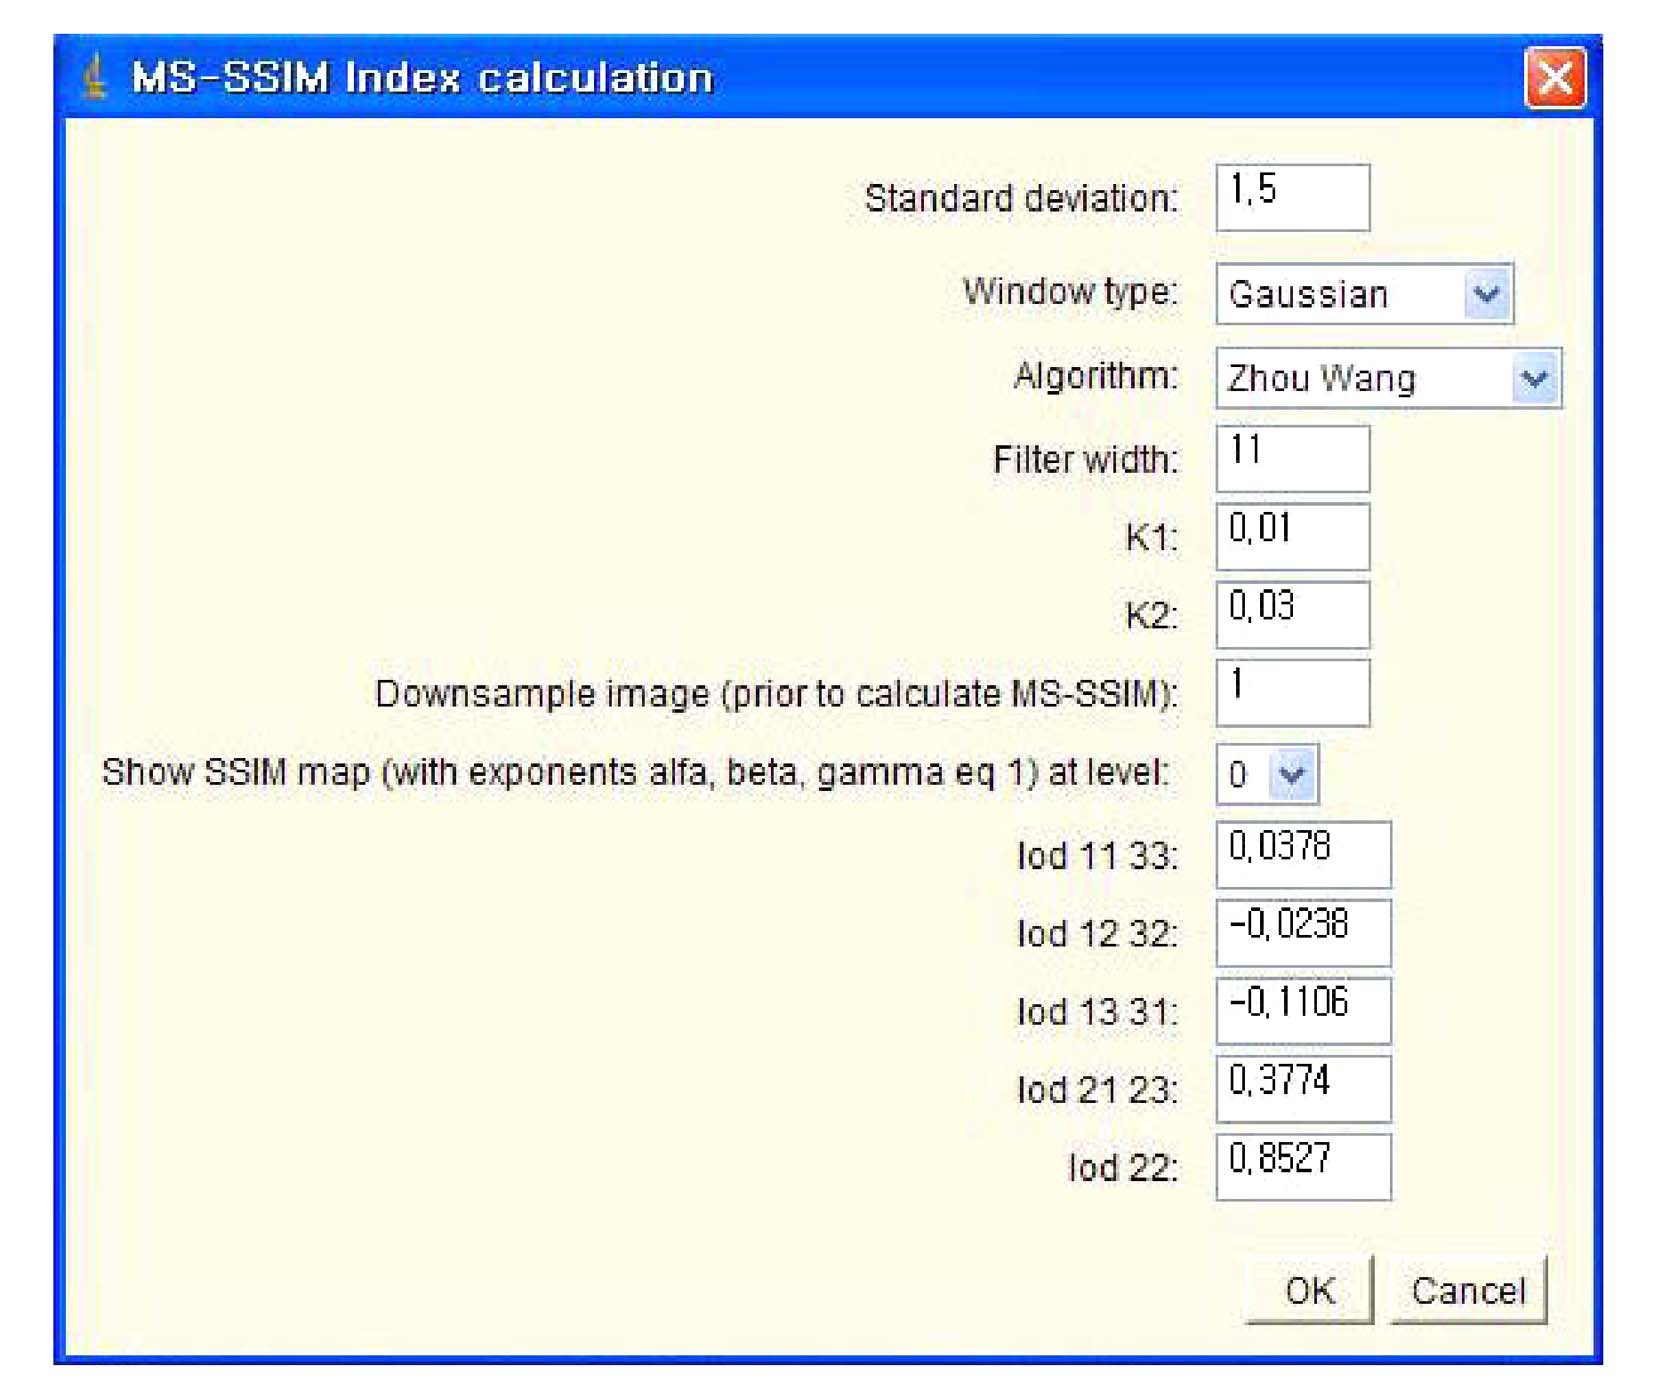 MS-SSIM Index calculation data(Z. Wang Algorithm).